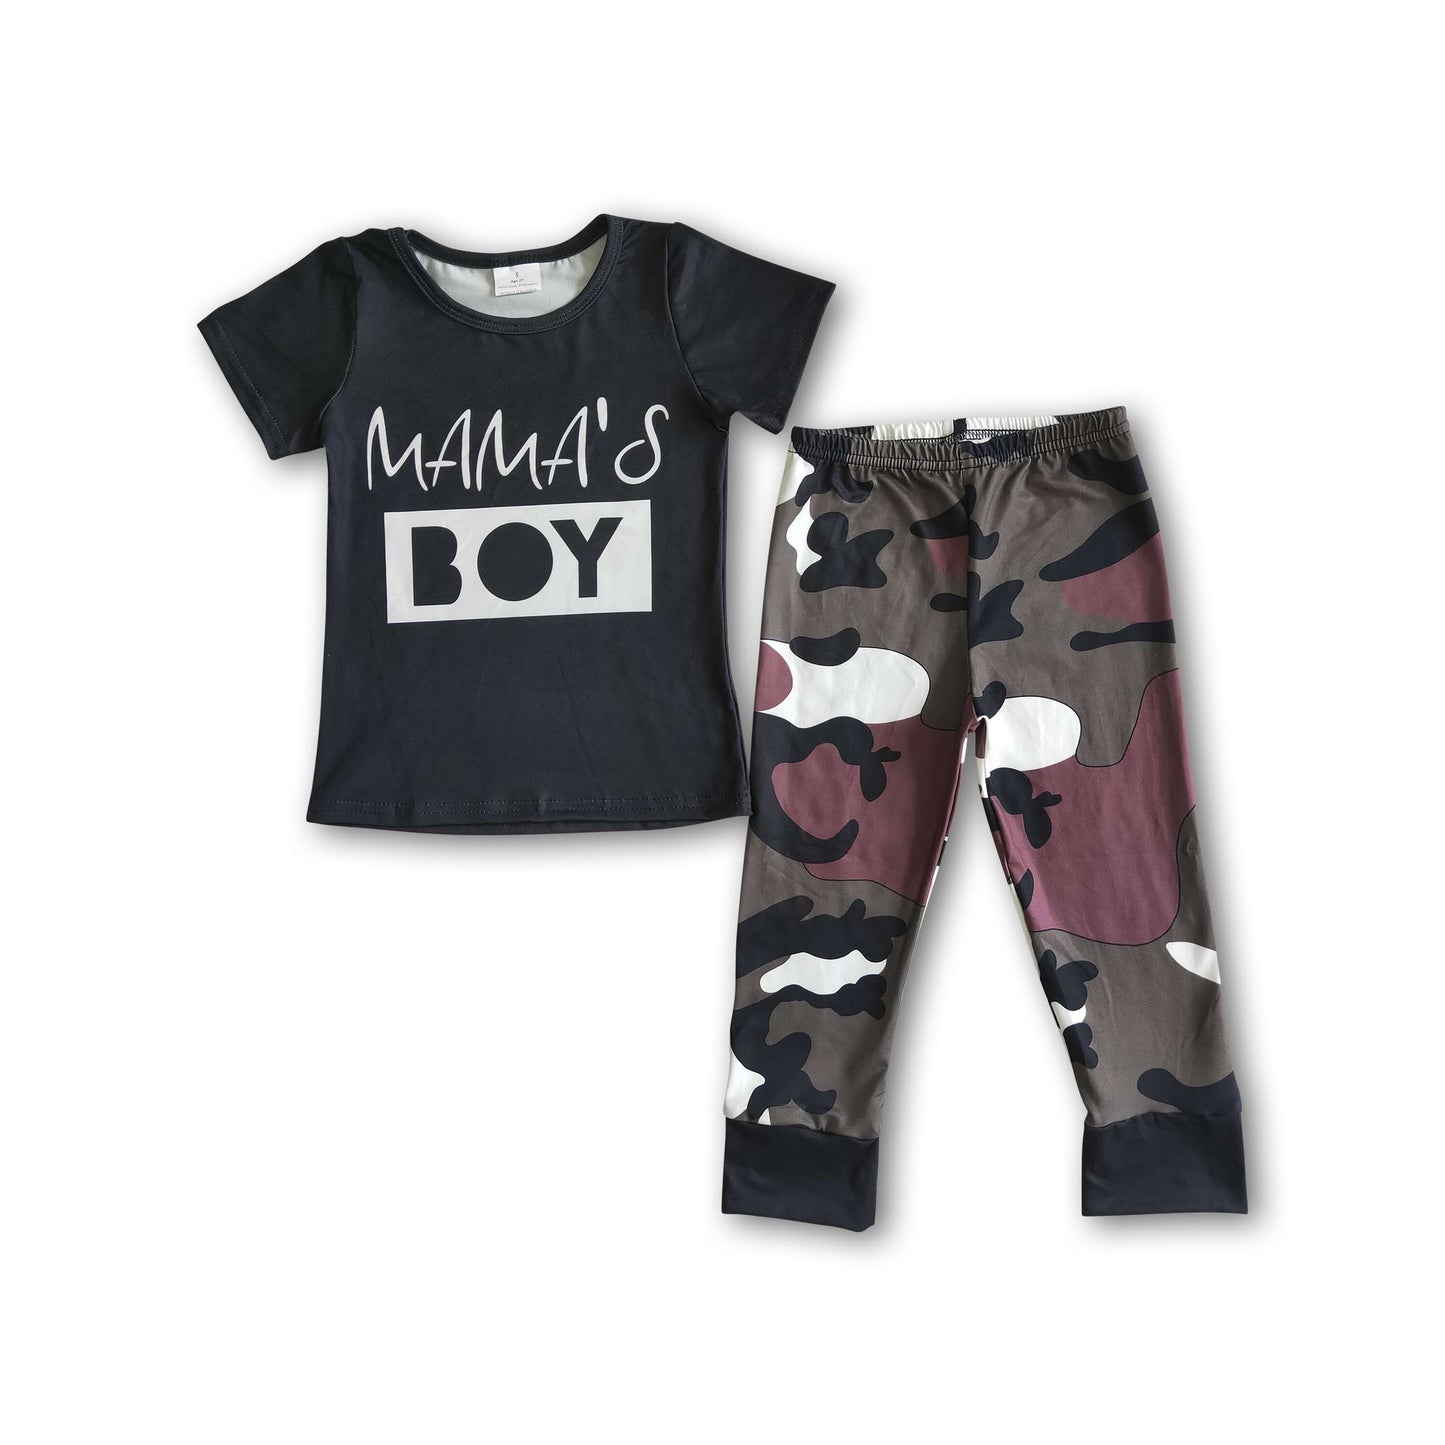 Mama's boy black shirt camo pants baby kids clothing set